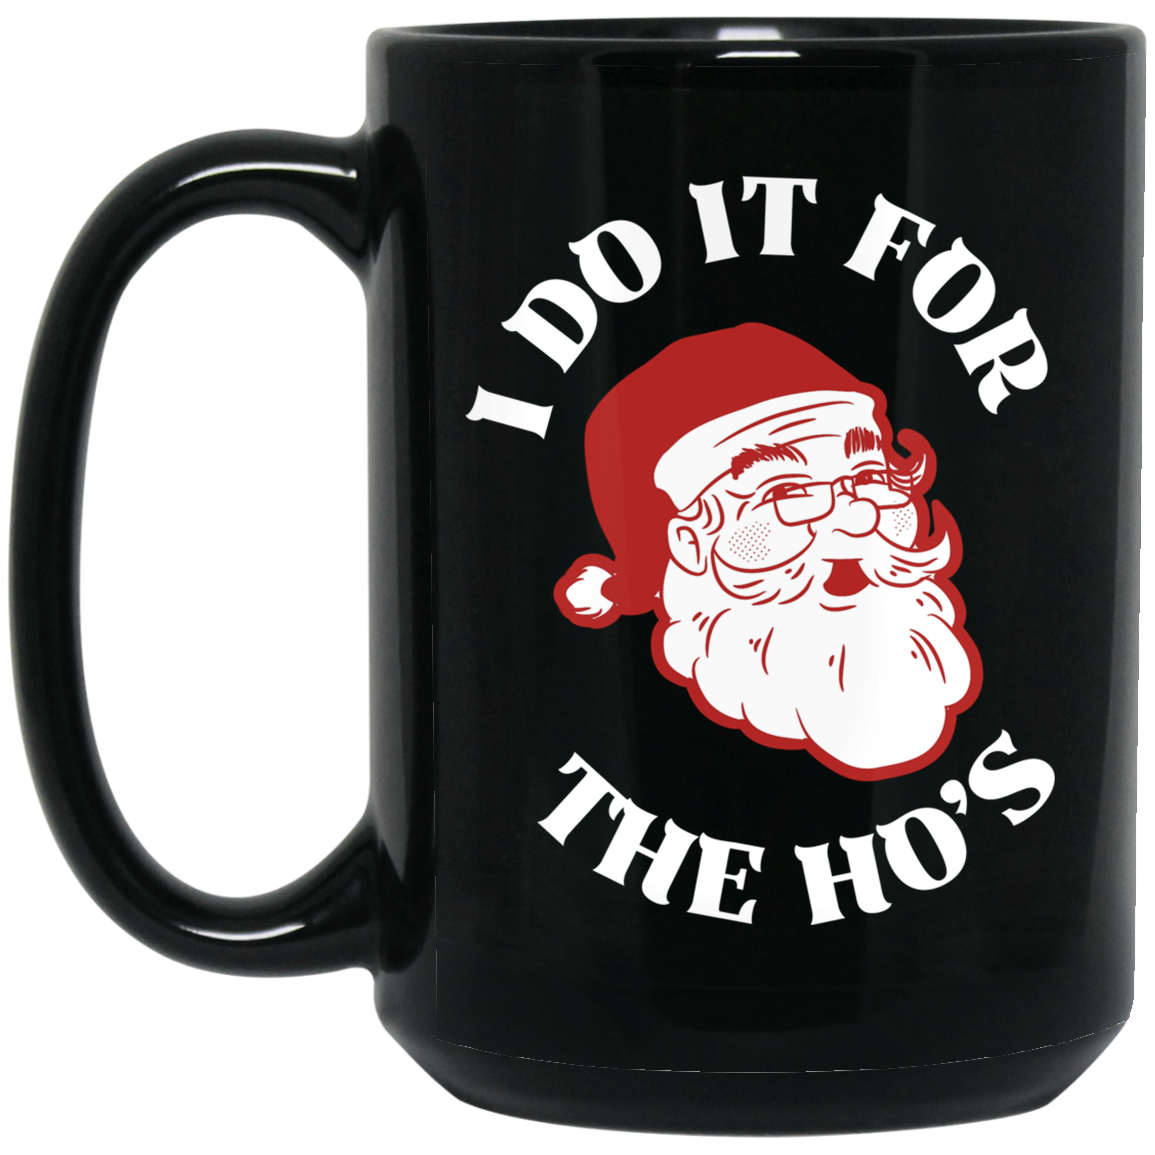 Dear Santa, (9) FOR THE HO's 15 oz. Black Mug